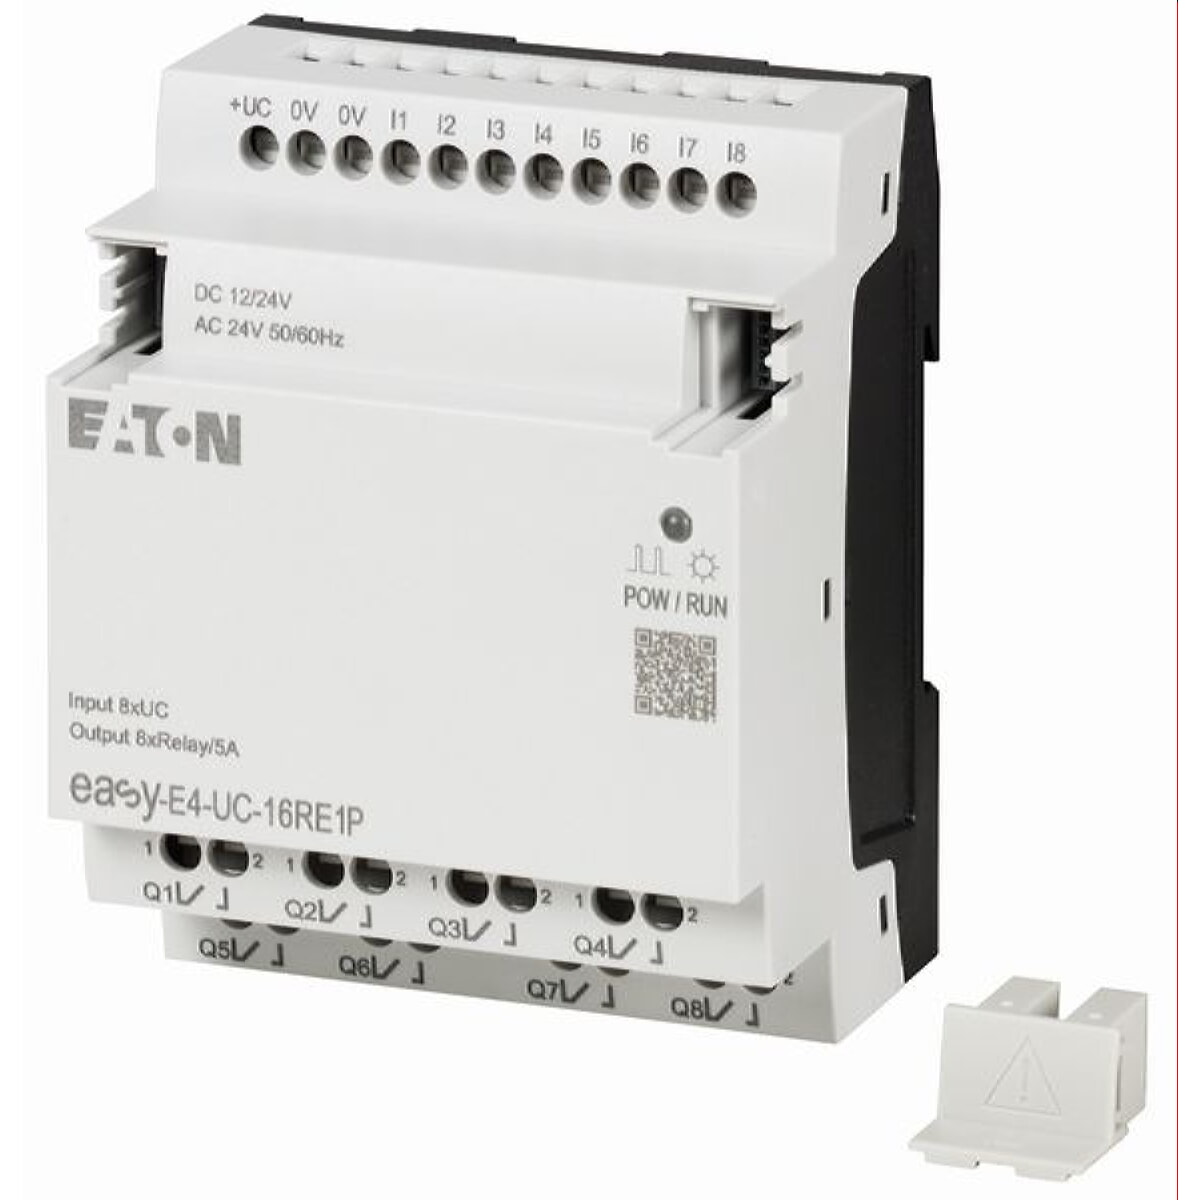 Eaton Electric Erweiterung EASY-E4-UC-16RE1P für easyE4